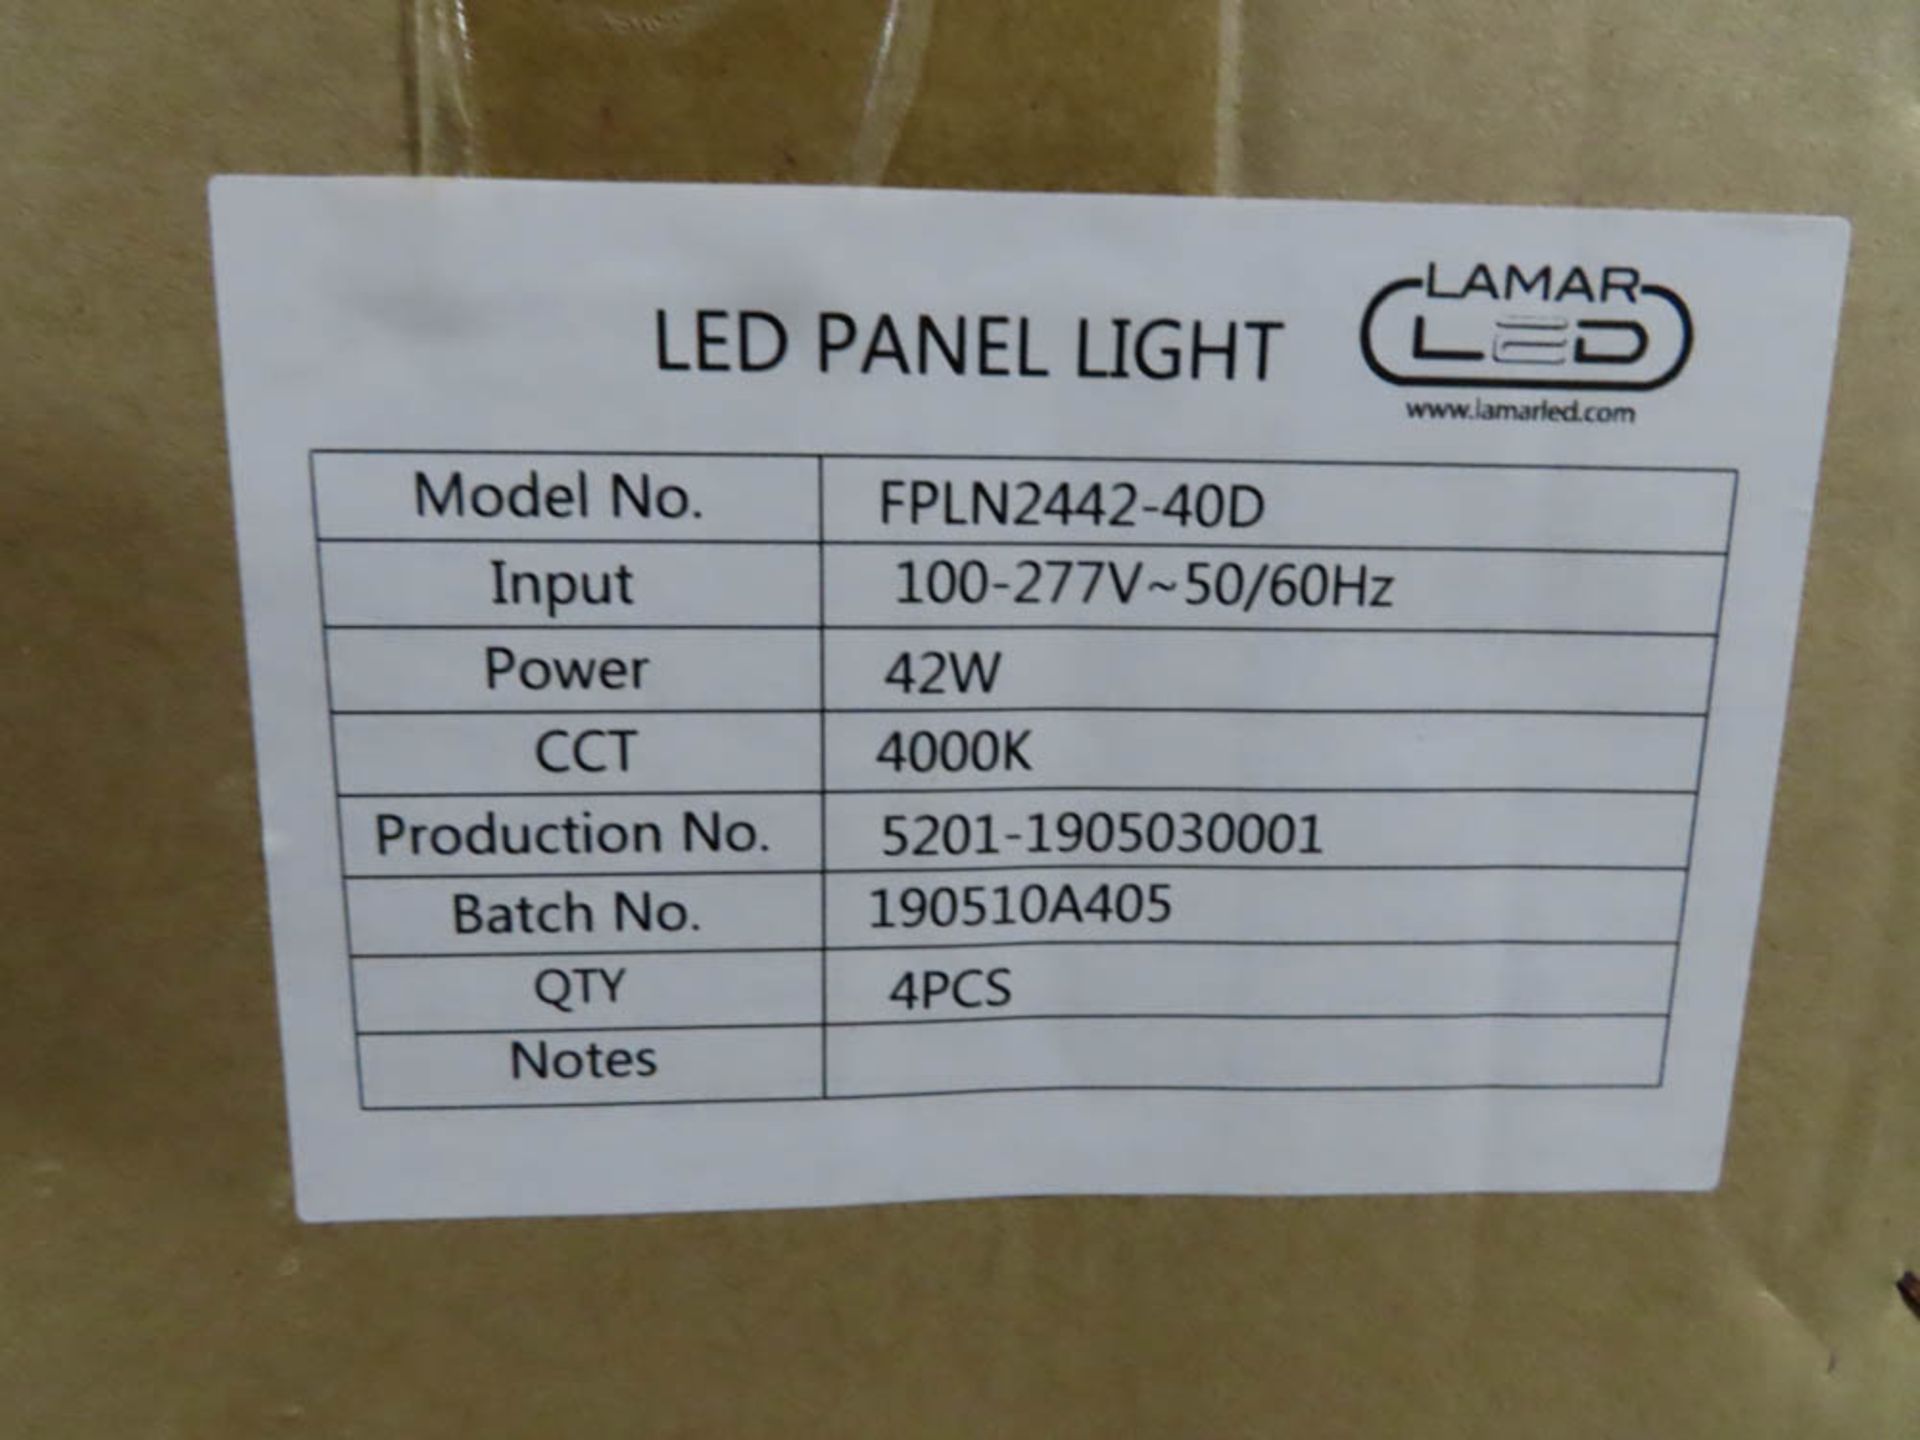 (70) MDL. FPLN2442-40D 42W X 4000K LED PANELS, 2' X 4' - Image 2 of 2